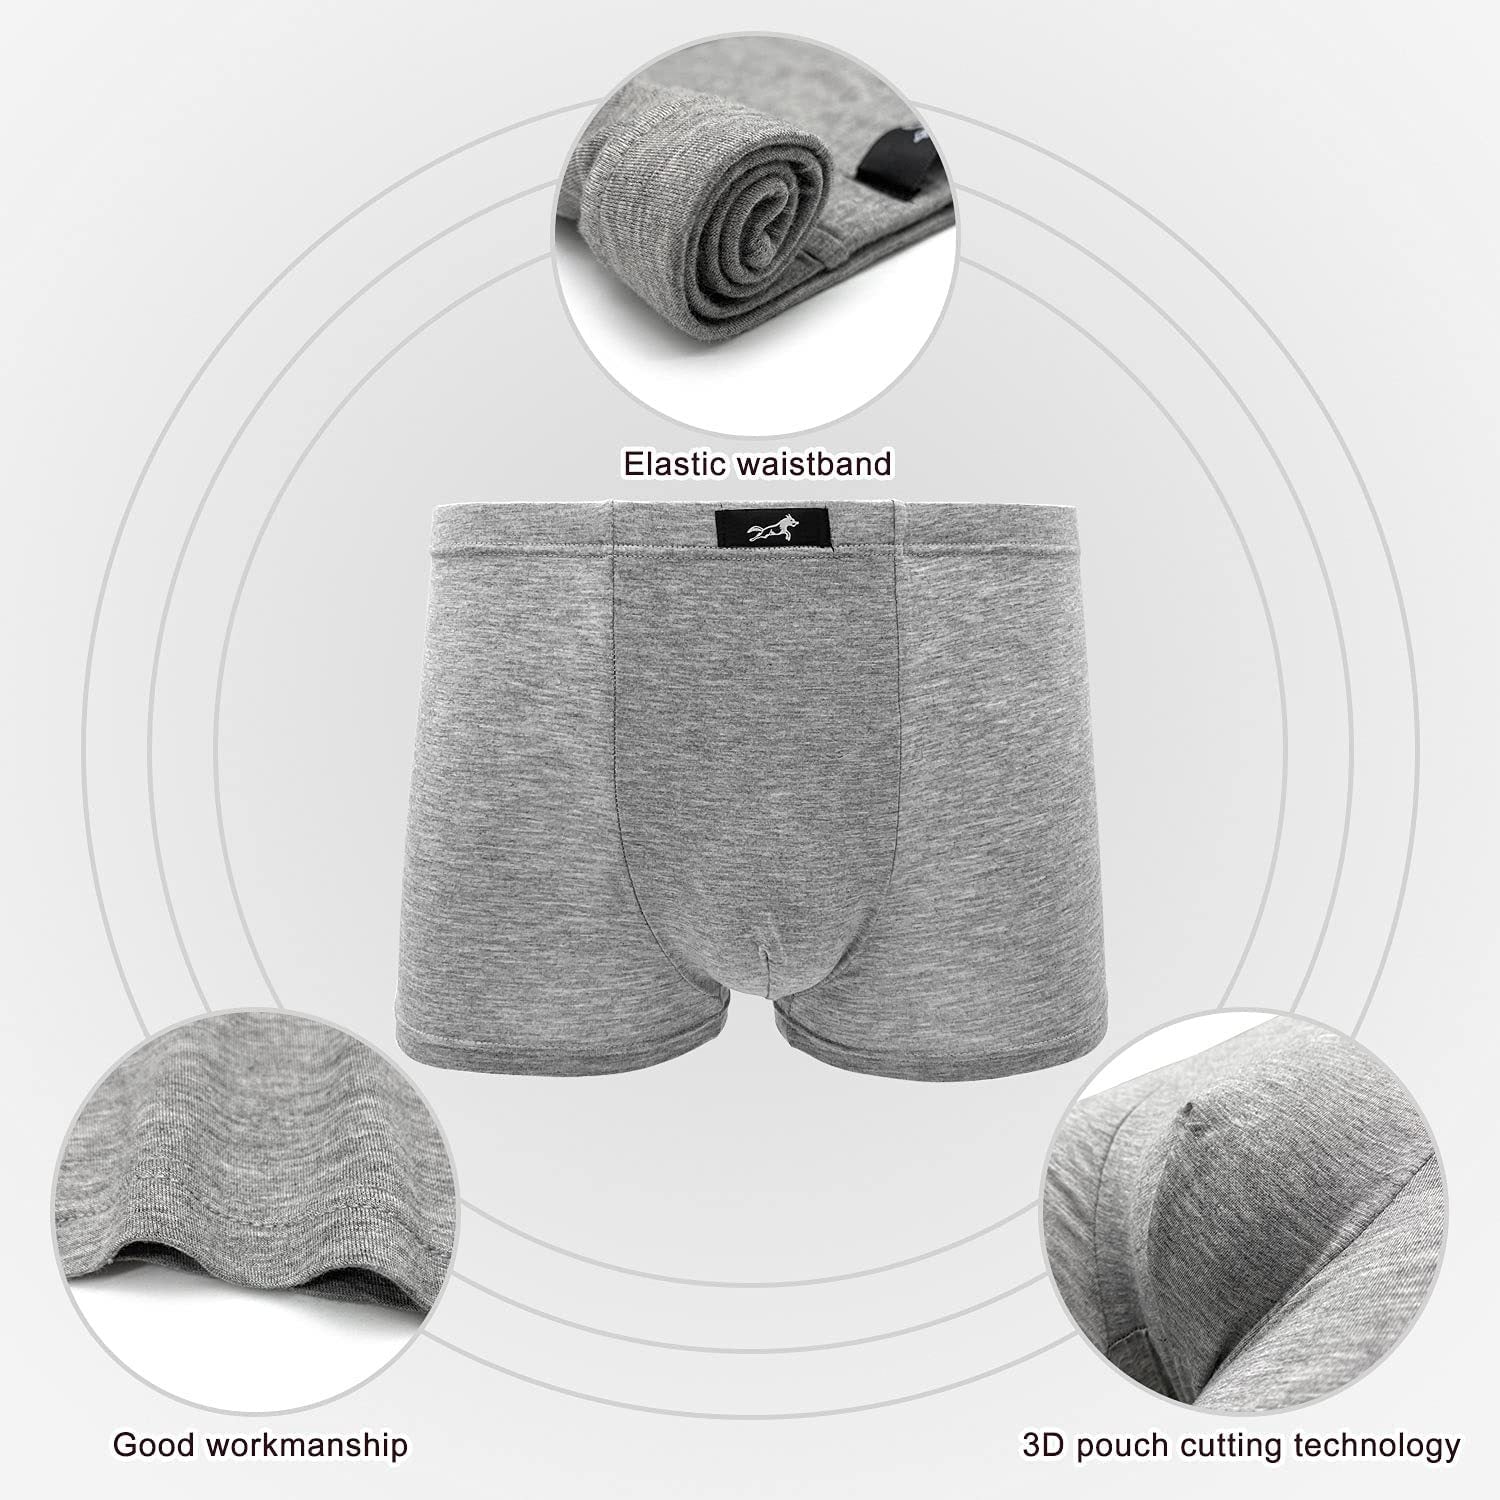 NXY Men's Breathable 7-Pack Underwear Boxer Briefs Cotton Trunks